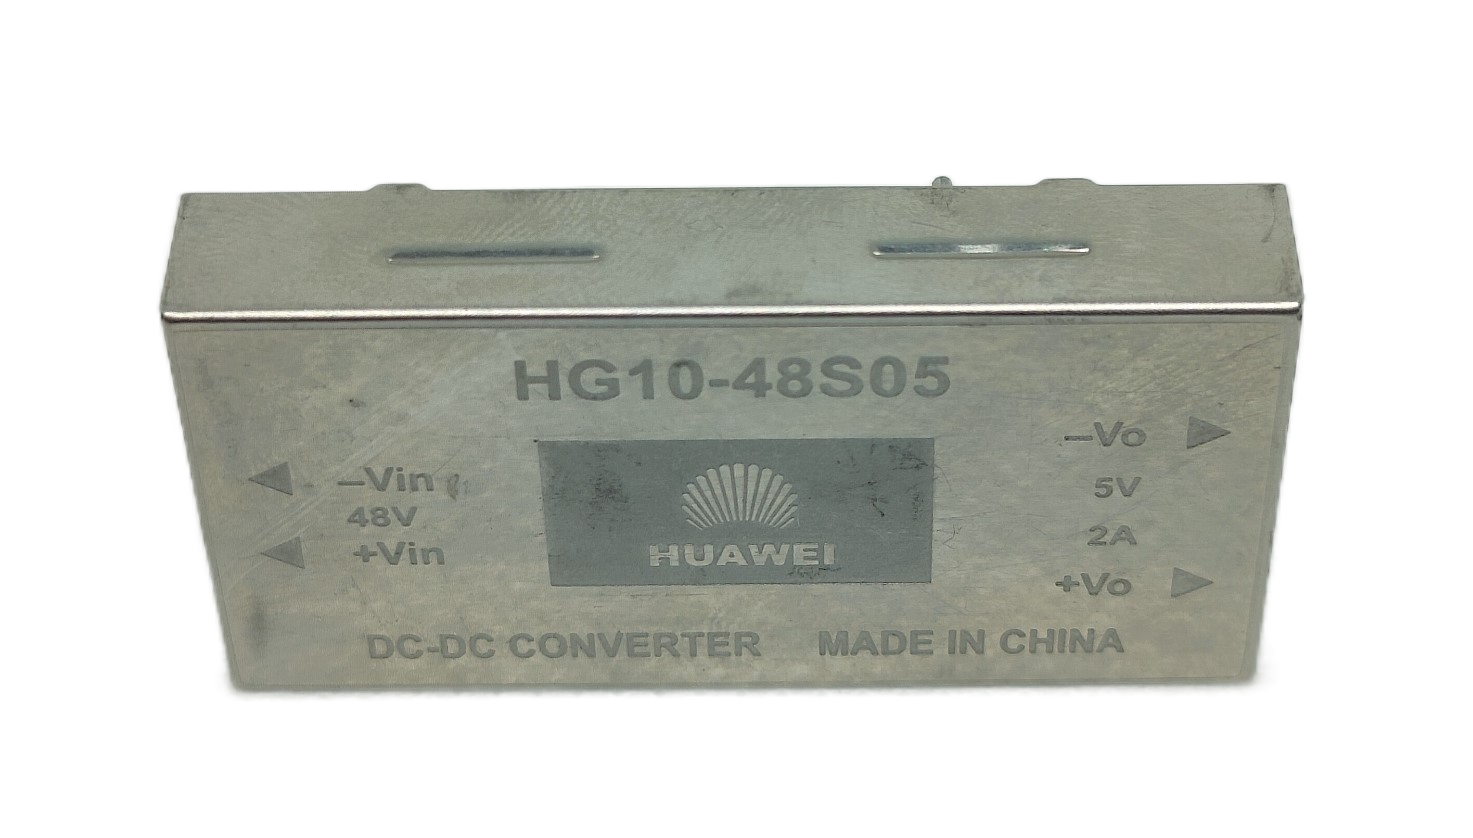 HG10-48505